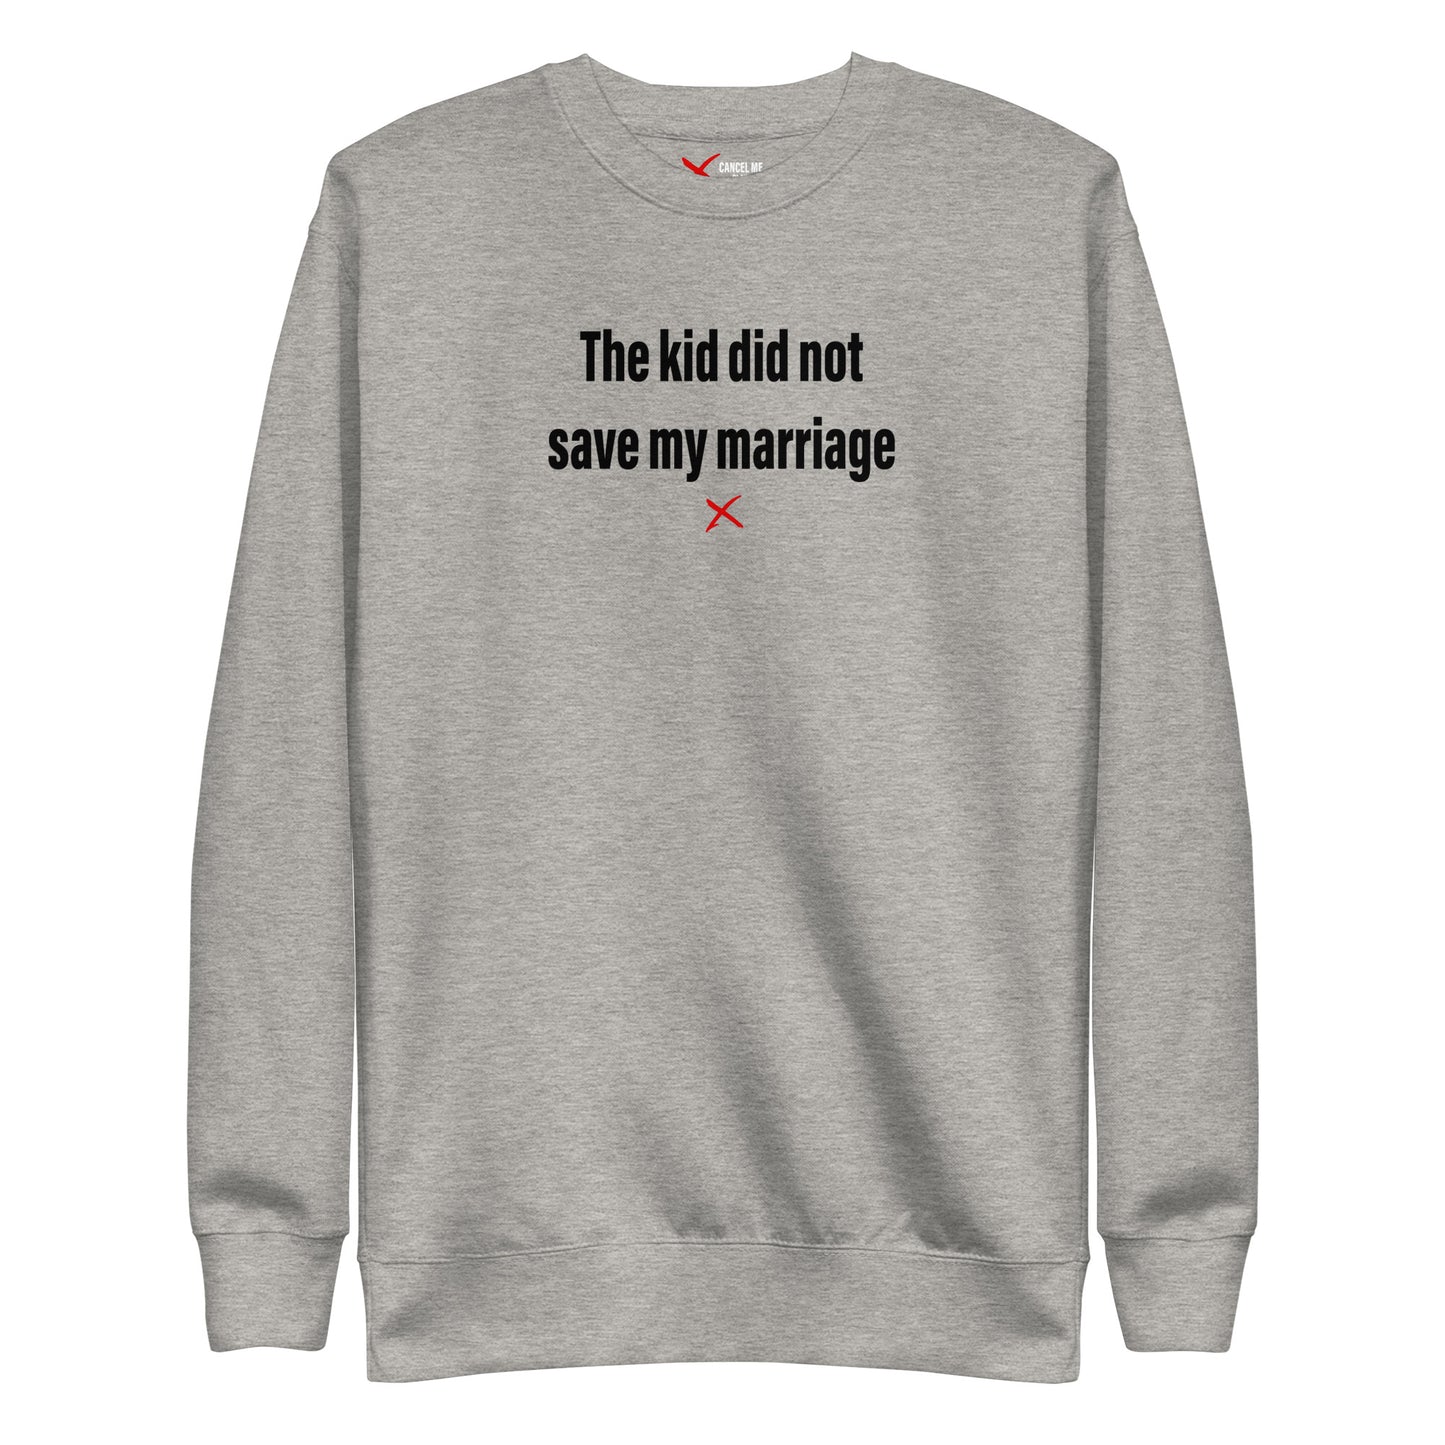 The kid did not save my marriage - Sweatshirt